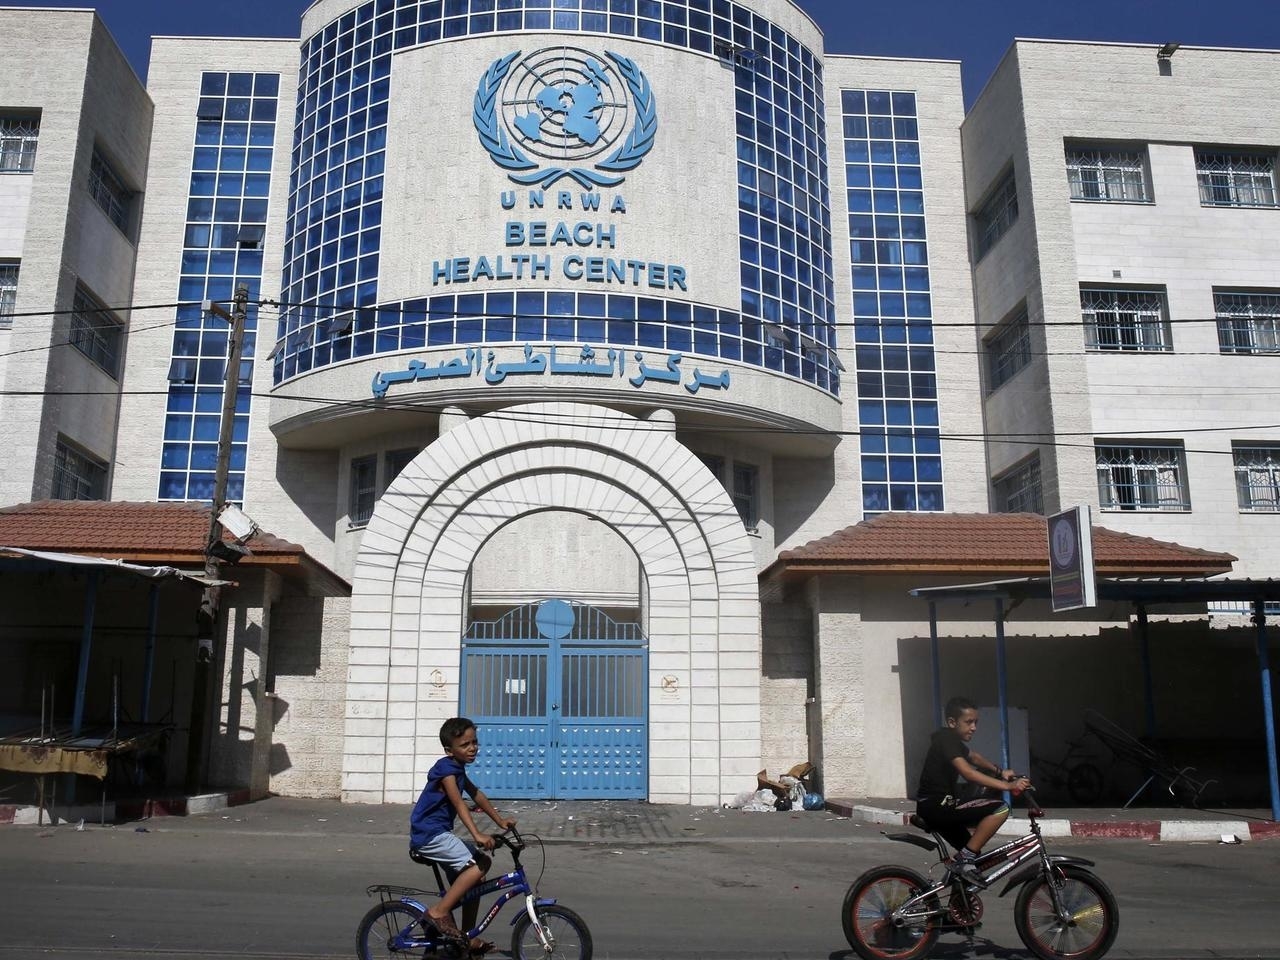 U.S. Ambassador to Jordan visits UNRWA Health Centre in Amman following U.S. announcement to resume financial support to UNRWA